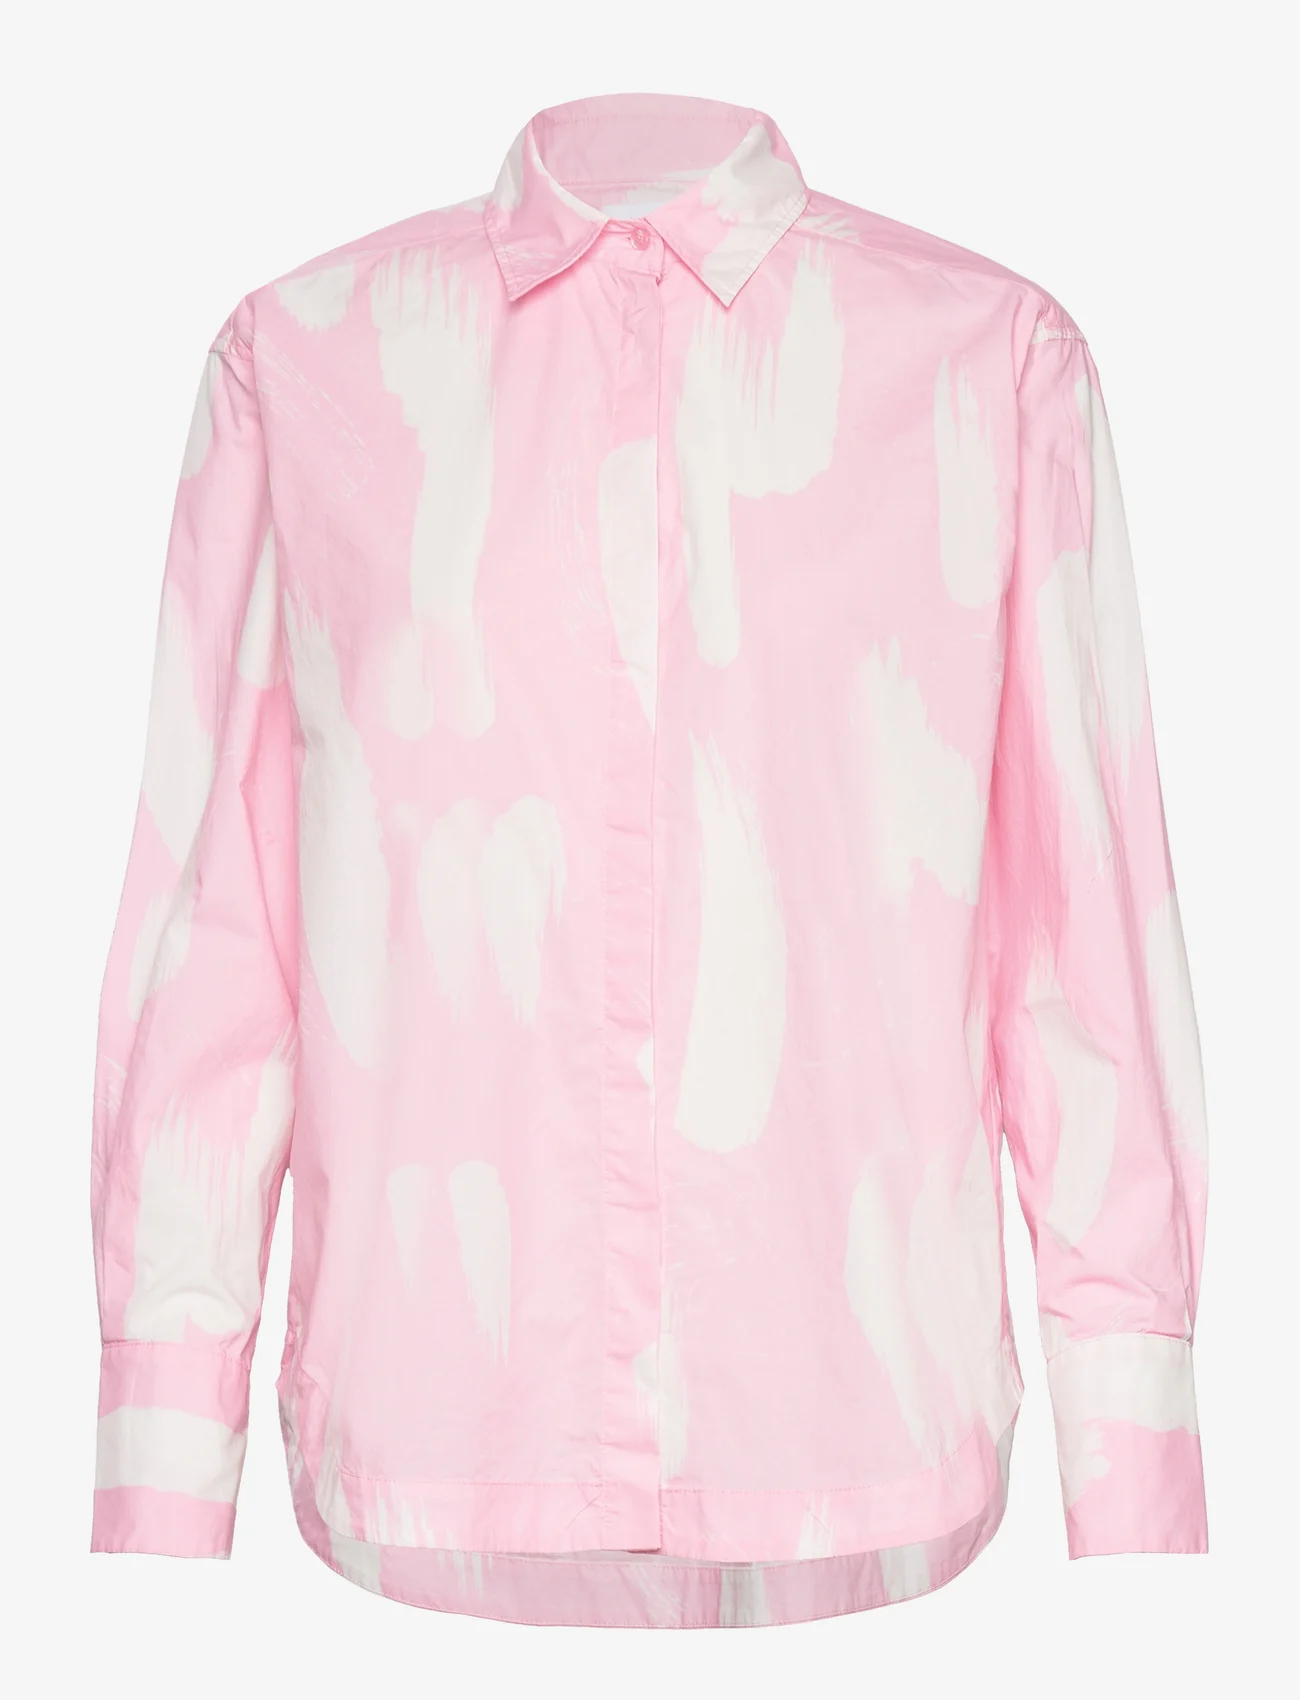 Levete Room - LR-ANNIKA - langärmlige hemden - l430c - powder pink combi - 0